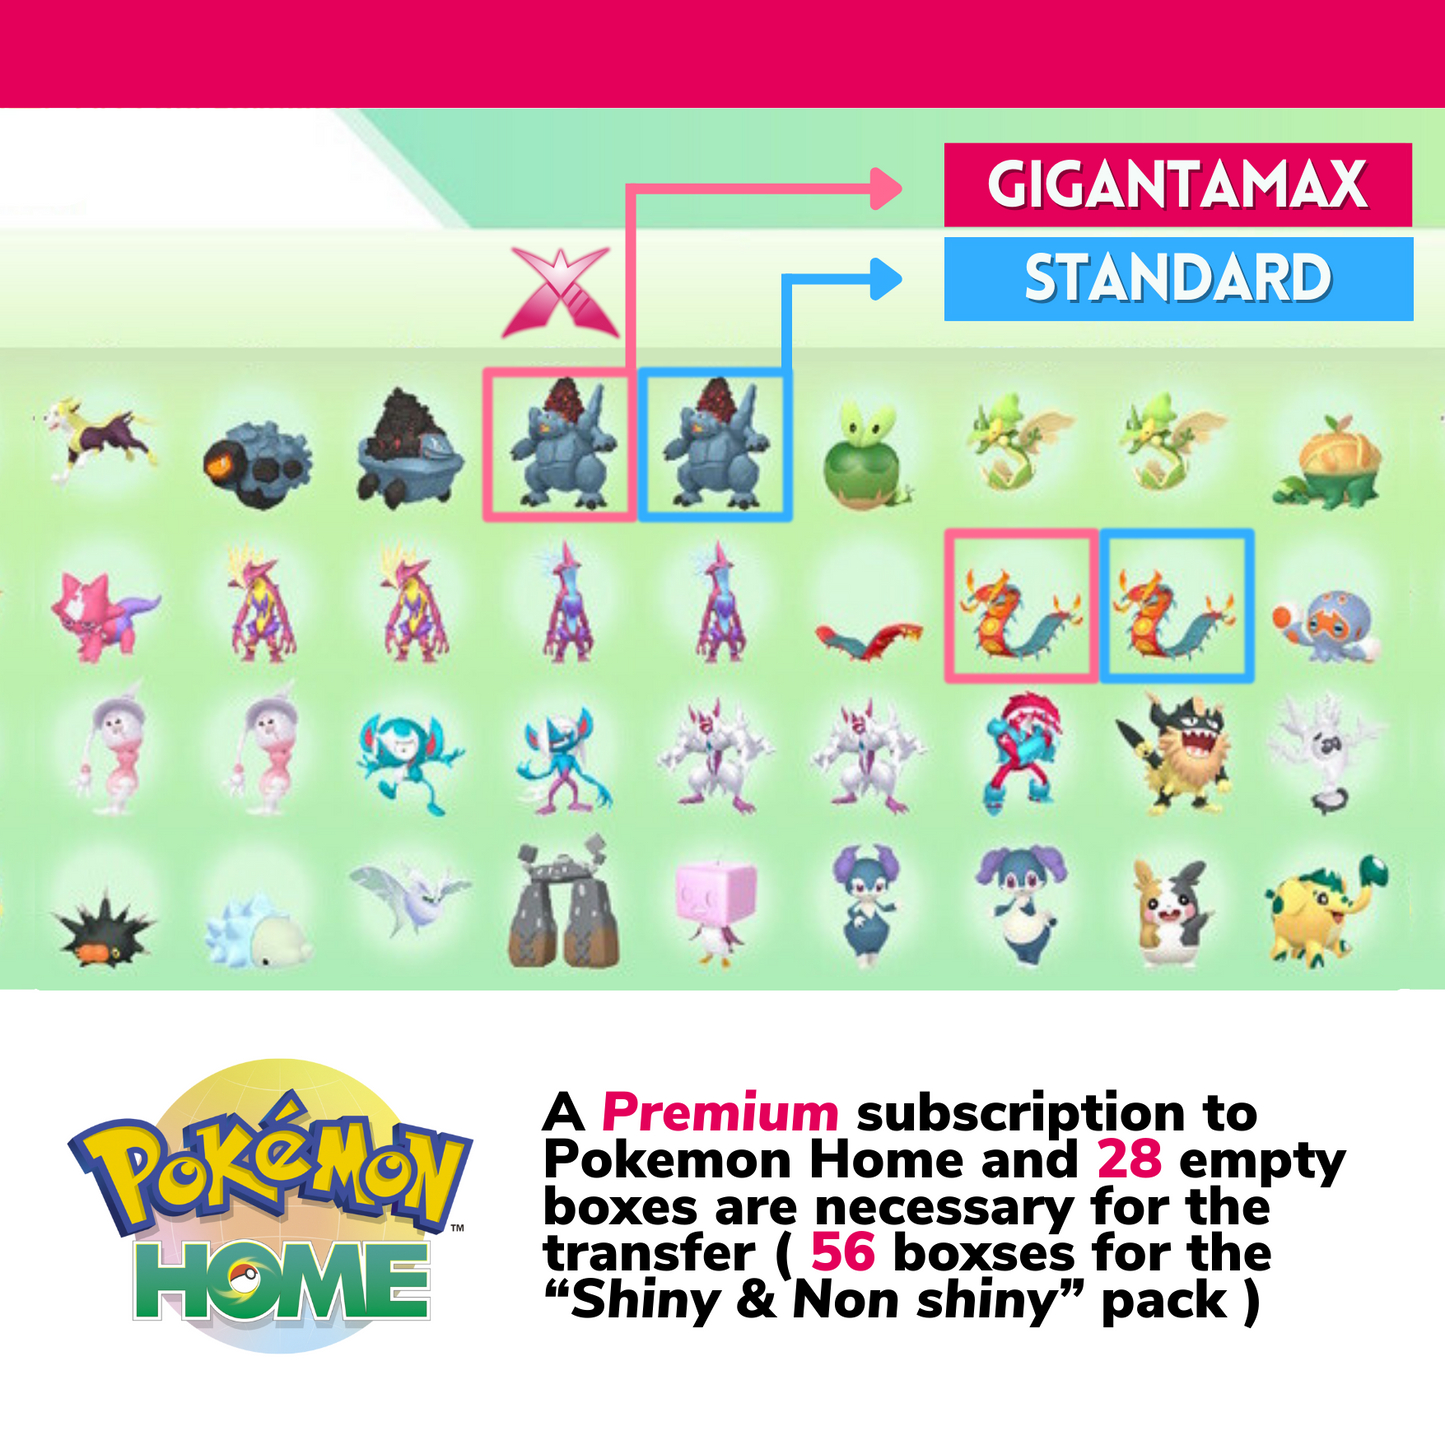 Pokémon Sword Shield Complete Shiny Living Dex 750 Custom OT Name Galar + DLC Pokedex Competitive Pokémon HOME 6 IV Legit by Il mio negozio | Shiny Living Dex